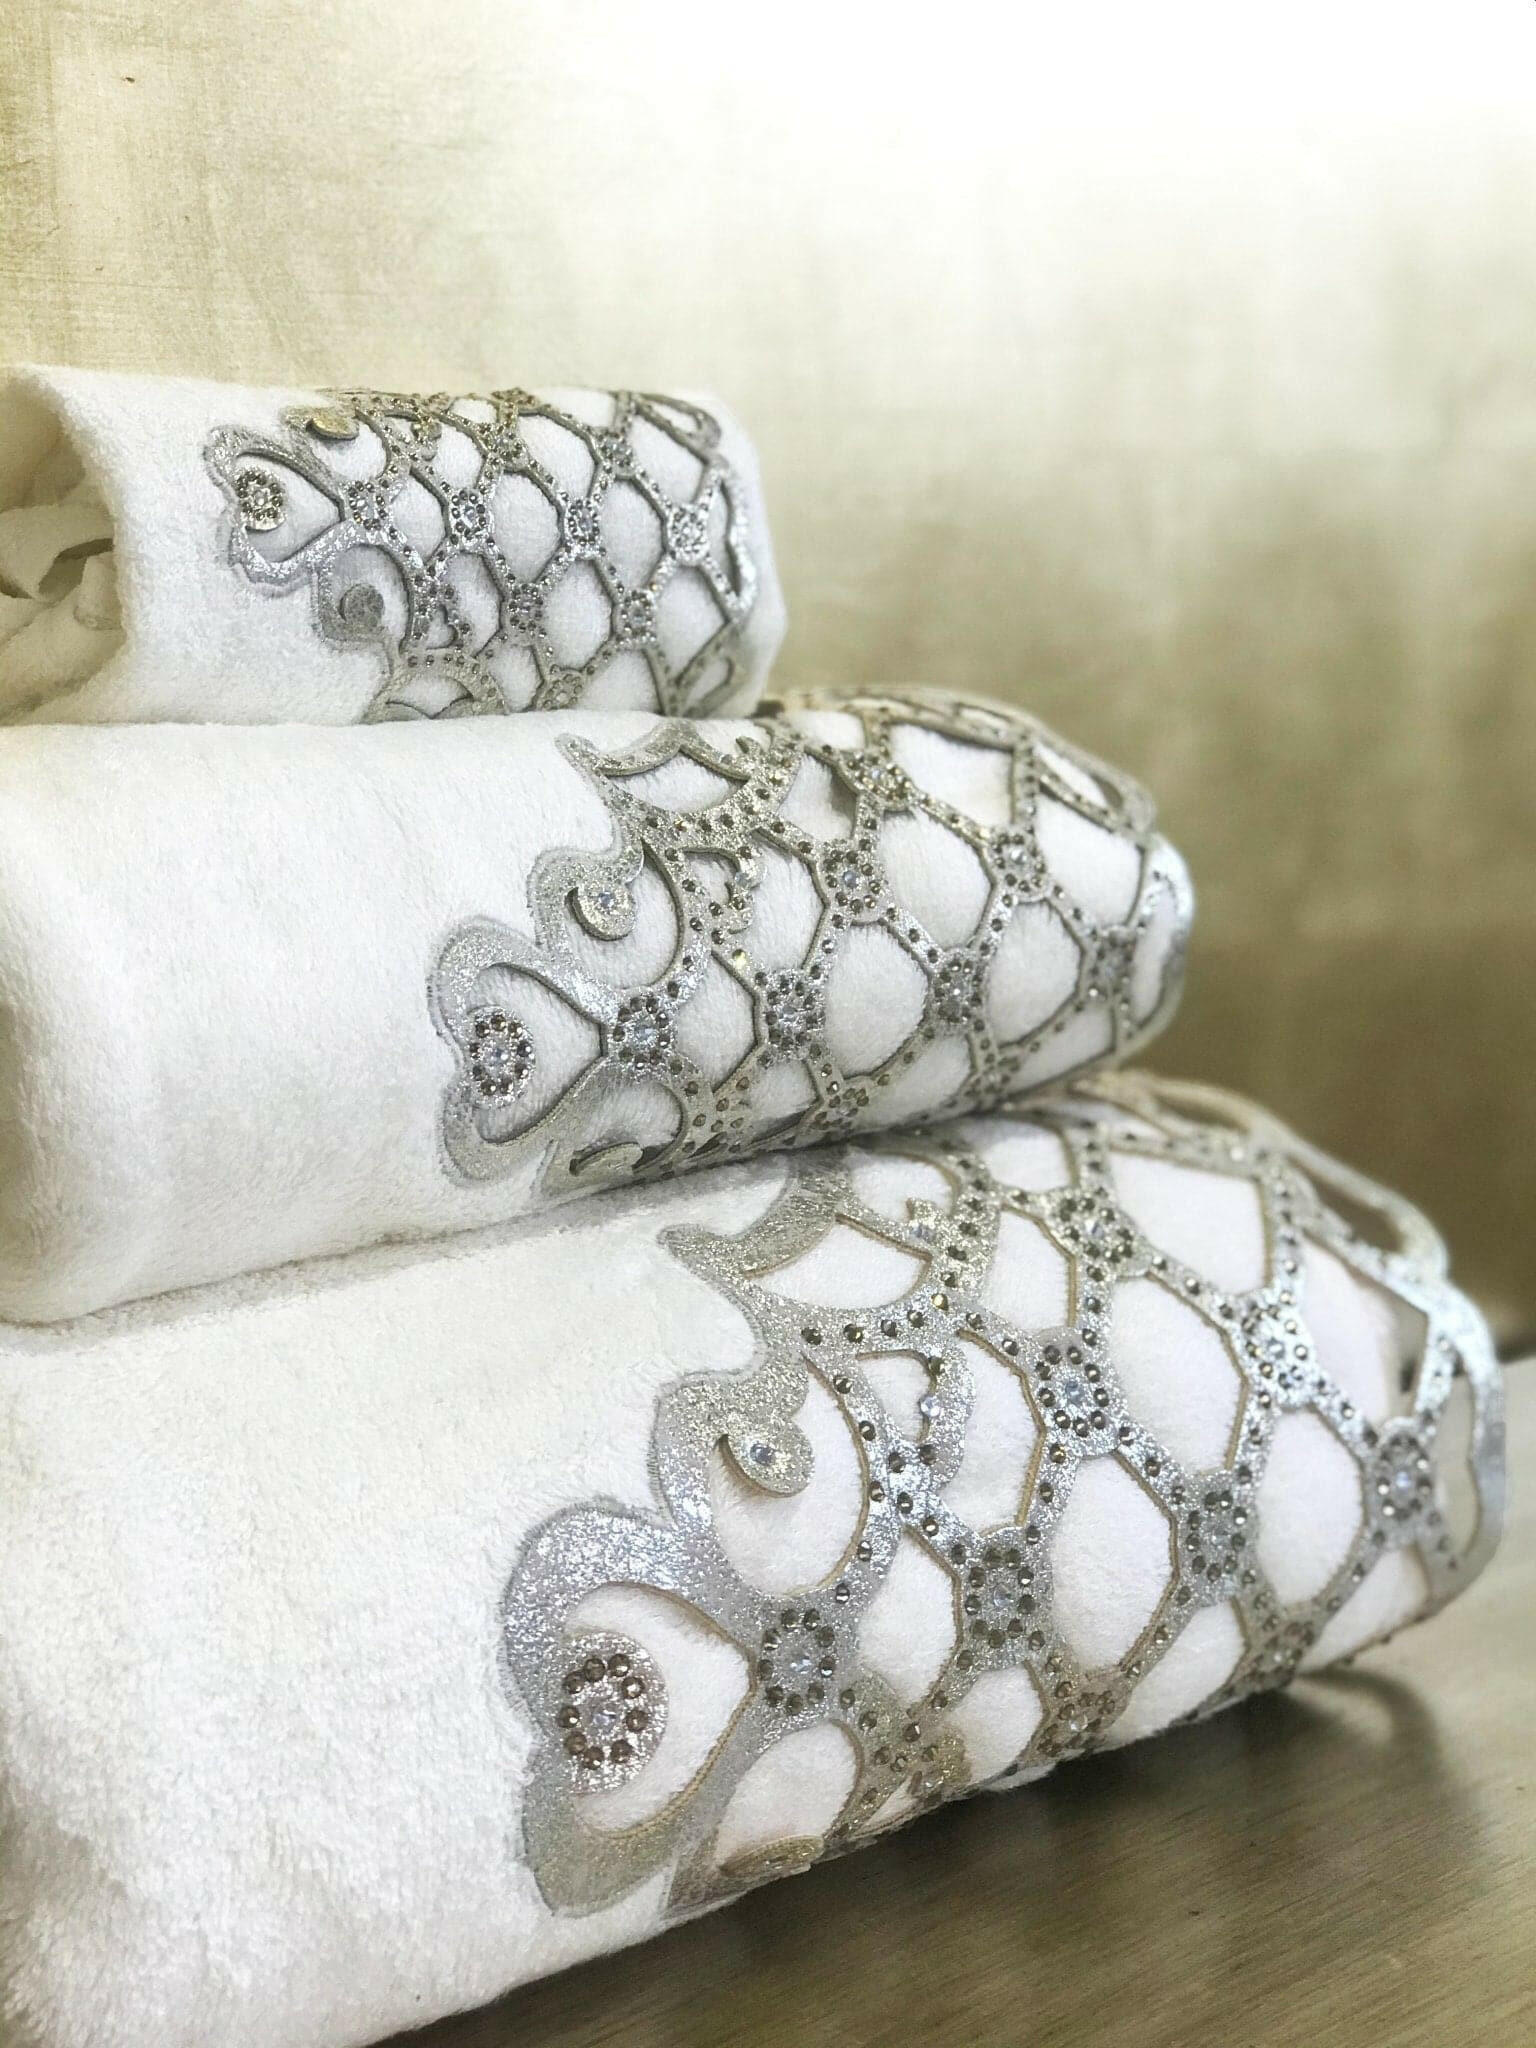 Mihrace Towel Set - creativehome-designs